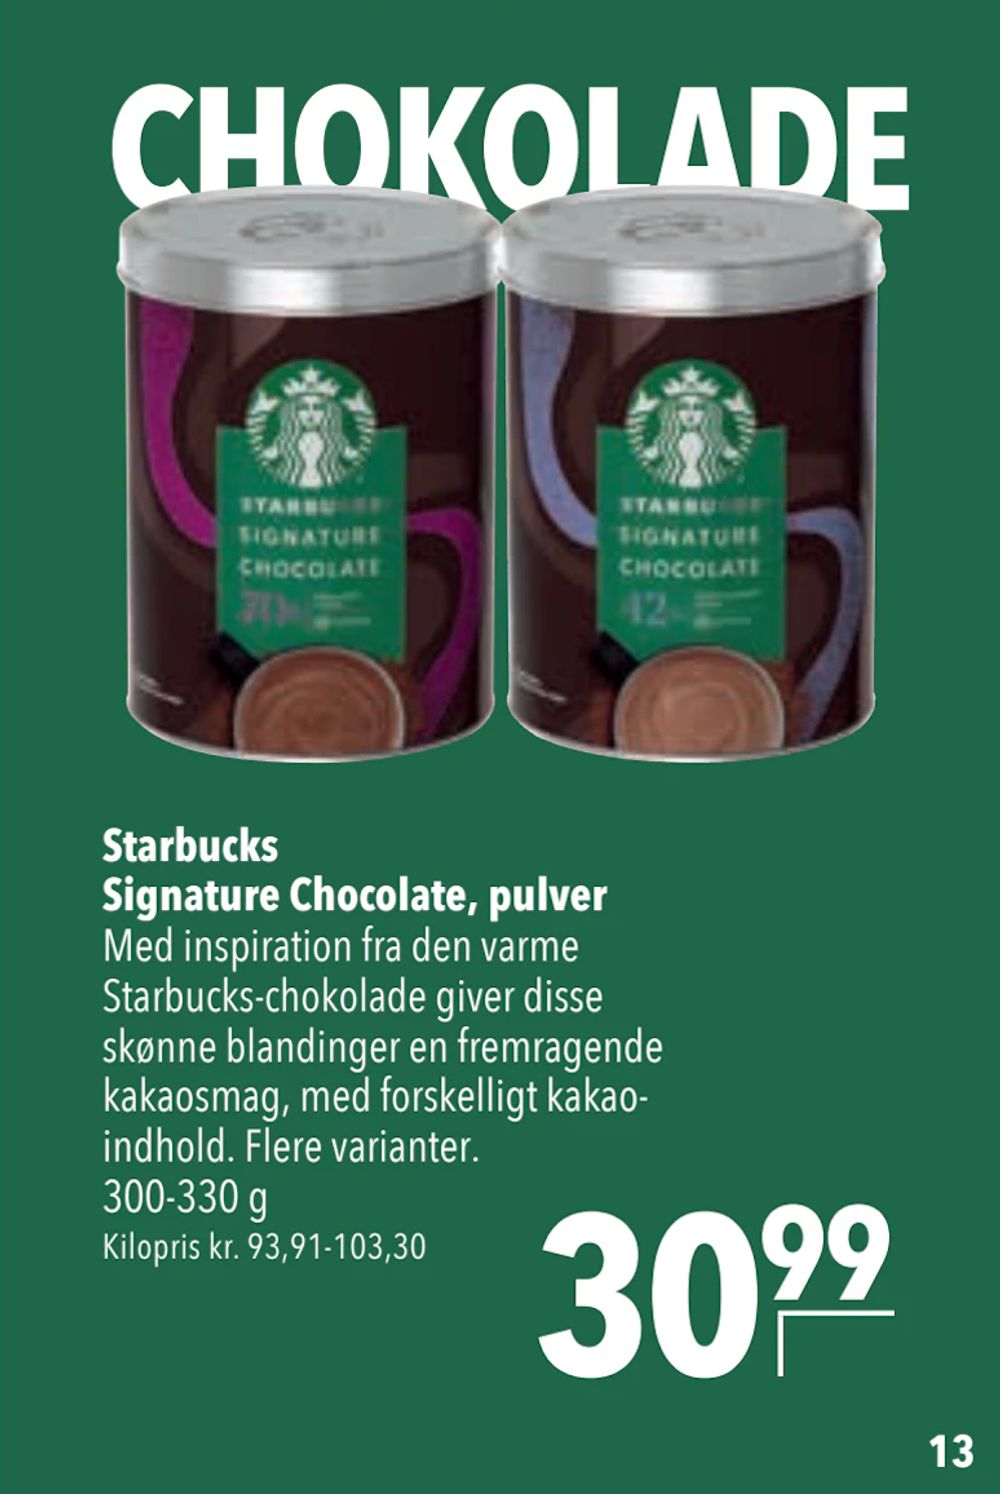 Tilbud på Starbucks Signature Chocolate, pulver fra CITTI til 30,99 kr.